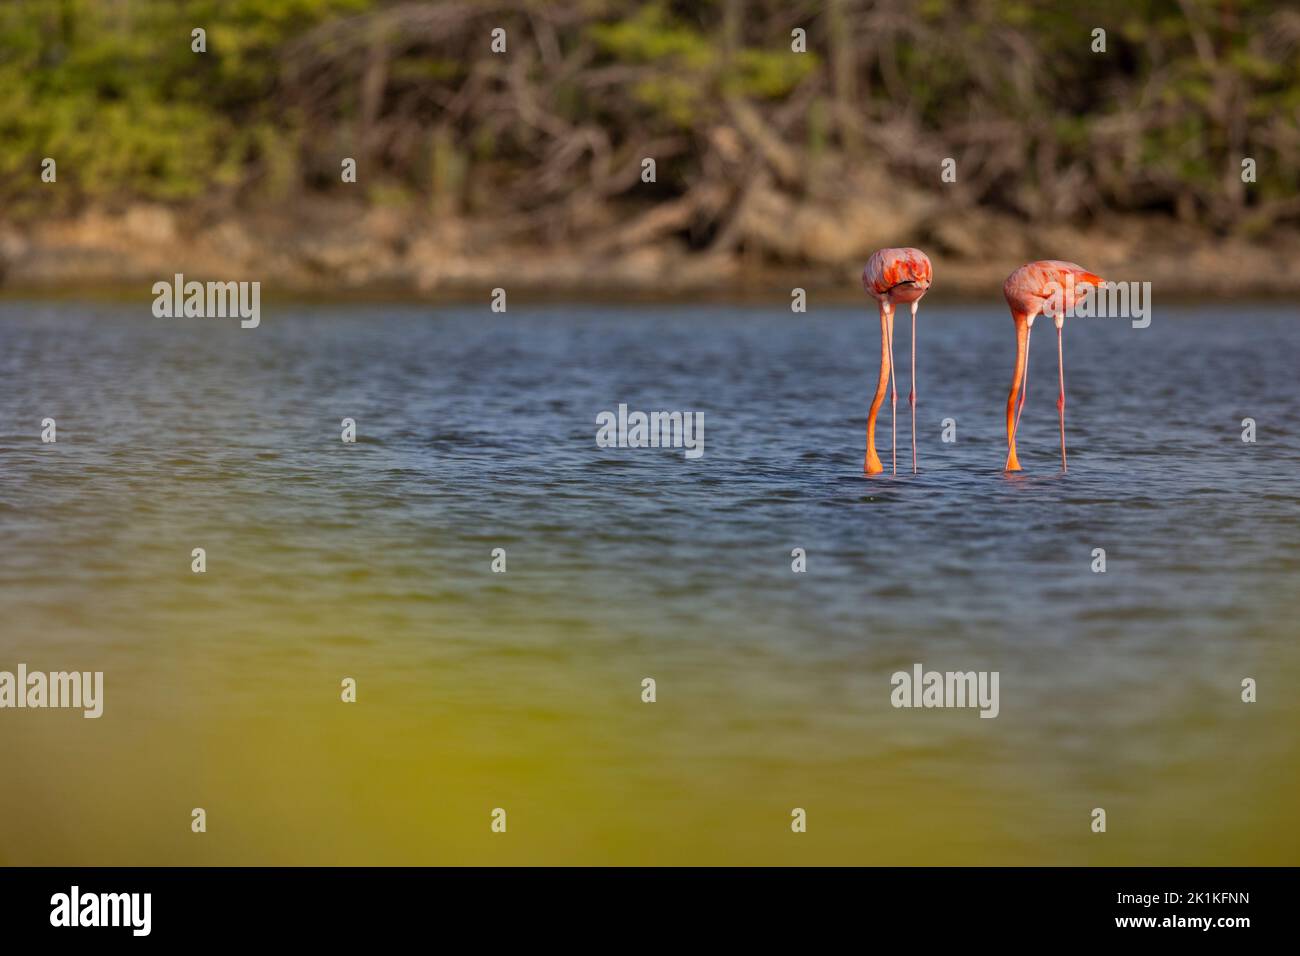 American flamingo Phoenicopterus ruber, adults foraging in shallow lagoon, Kralendijk, Bonaire, Dutch Antilles, Caribbean, Kralendijk, Bonaire, August Stock Photo